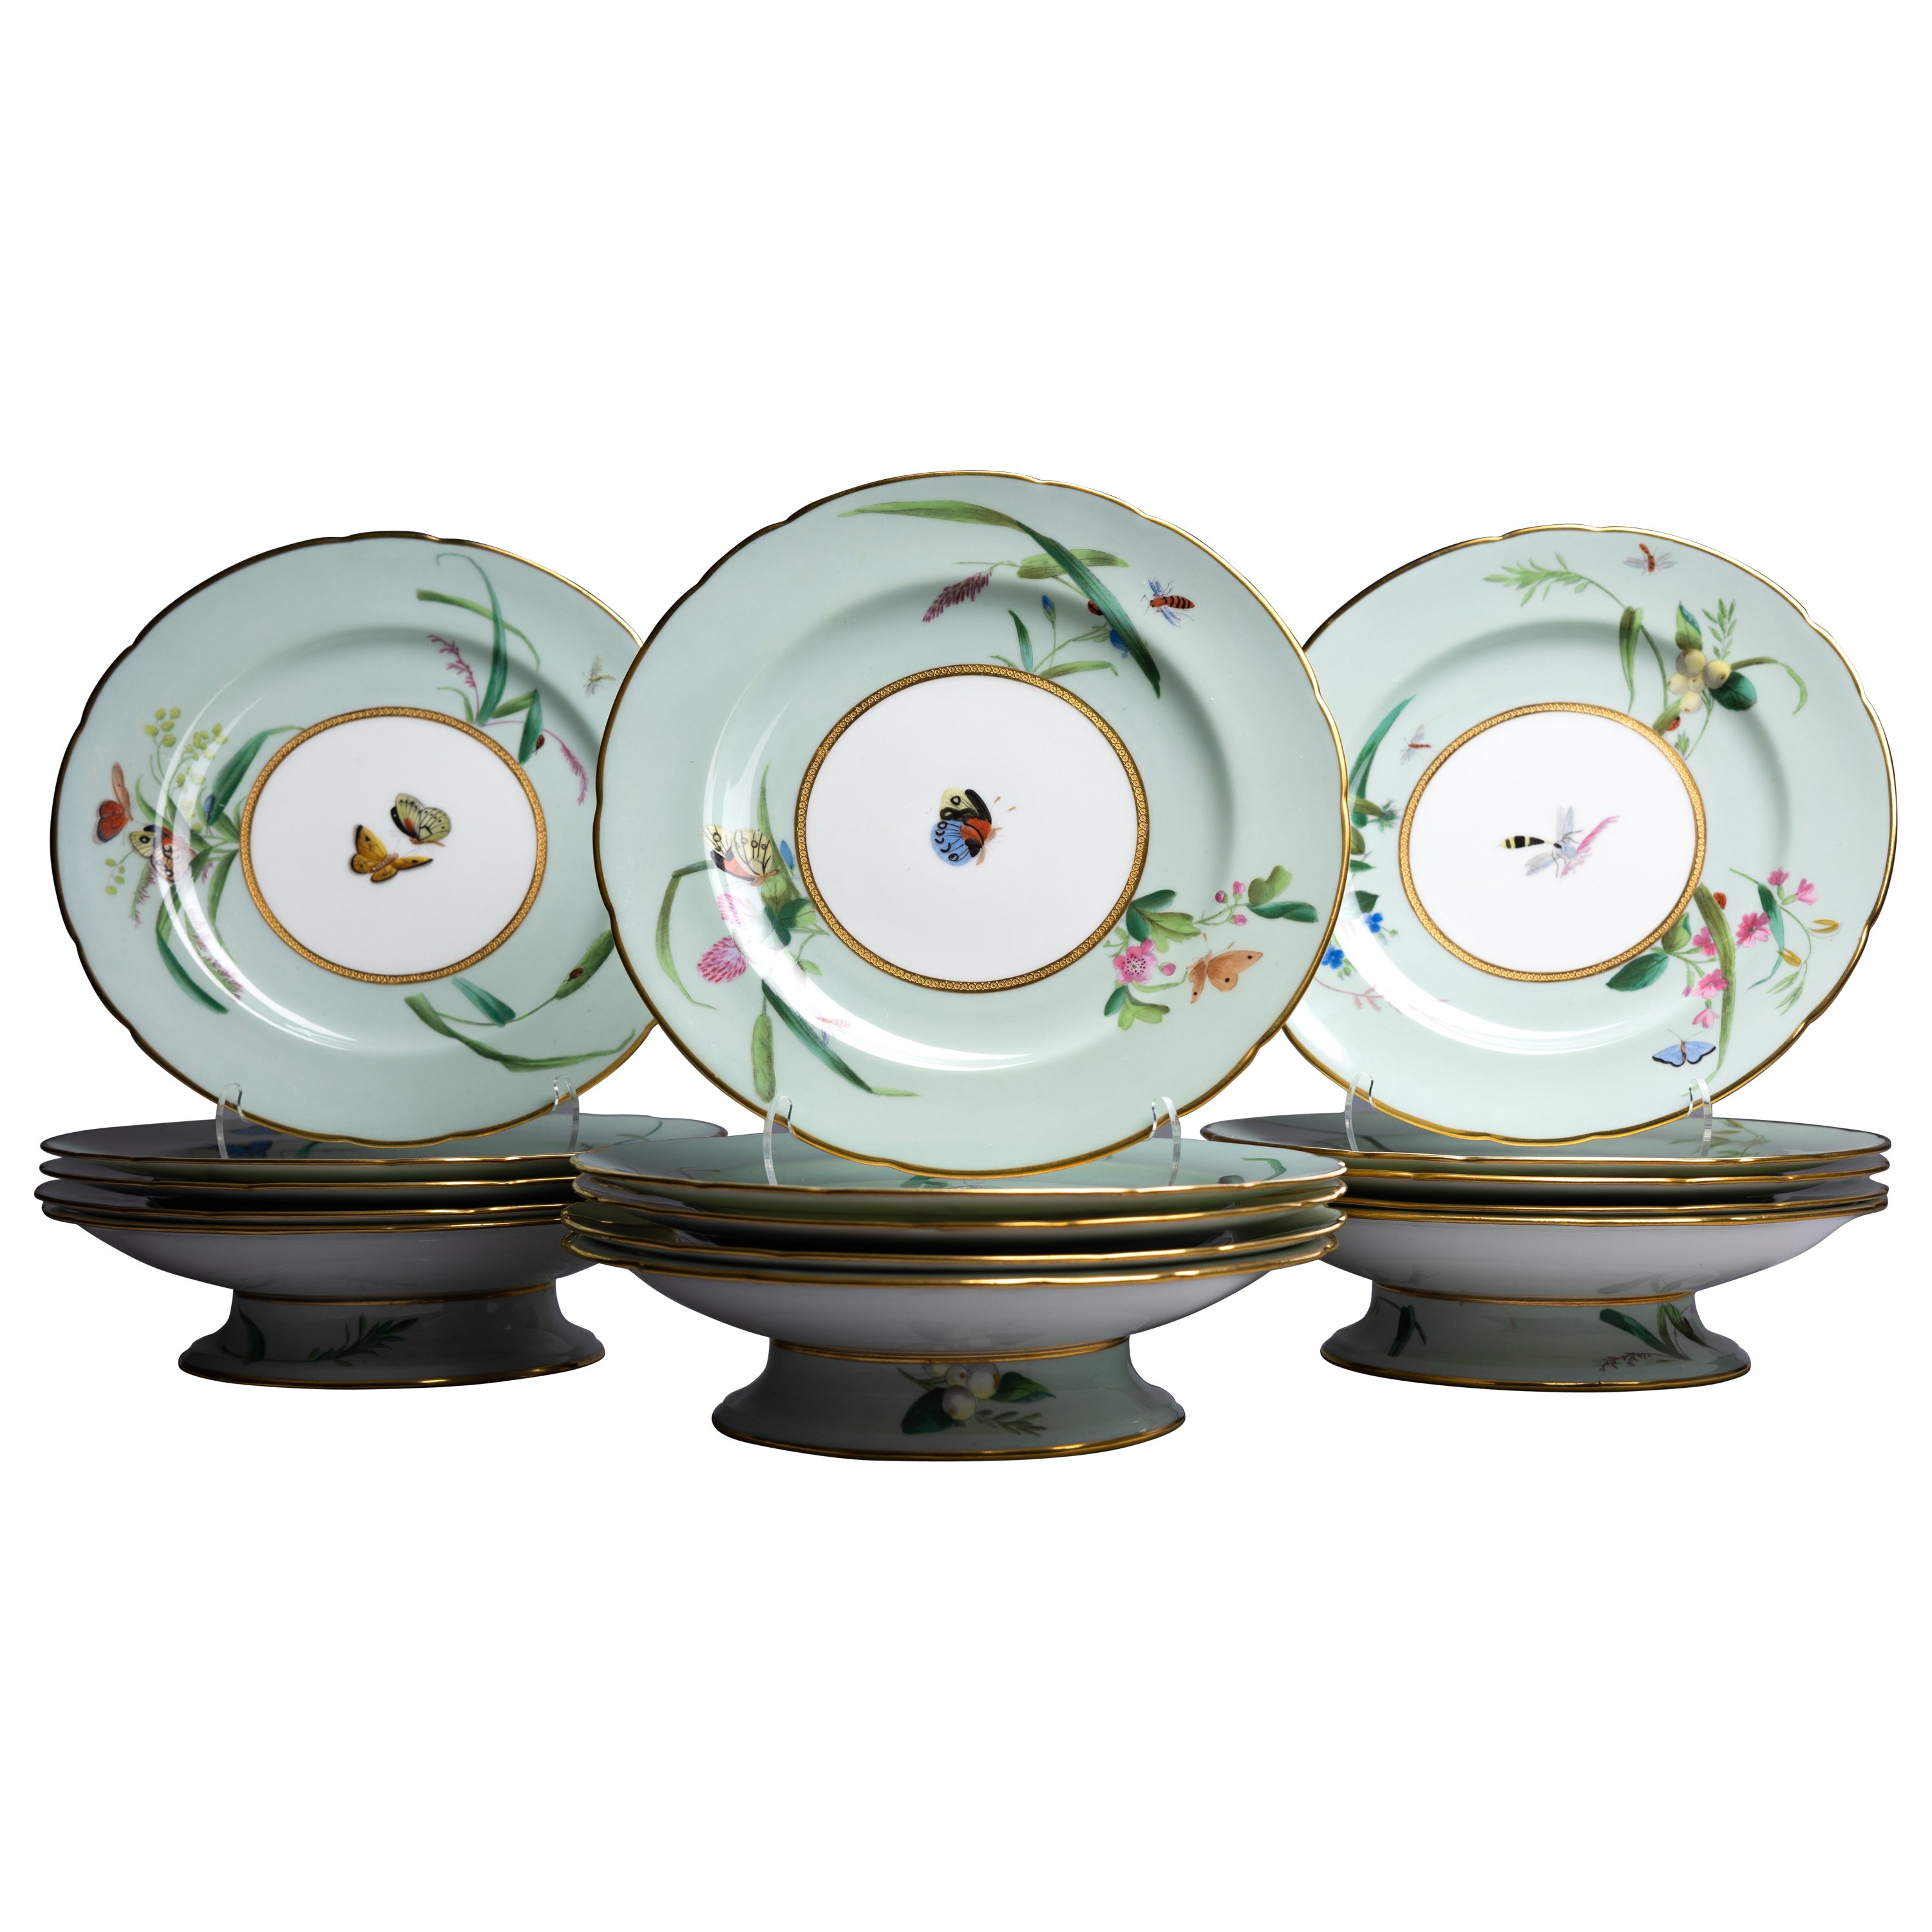 19th Century Aesthetic Minton Dinner Plates Set For Sale